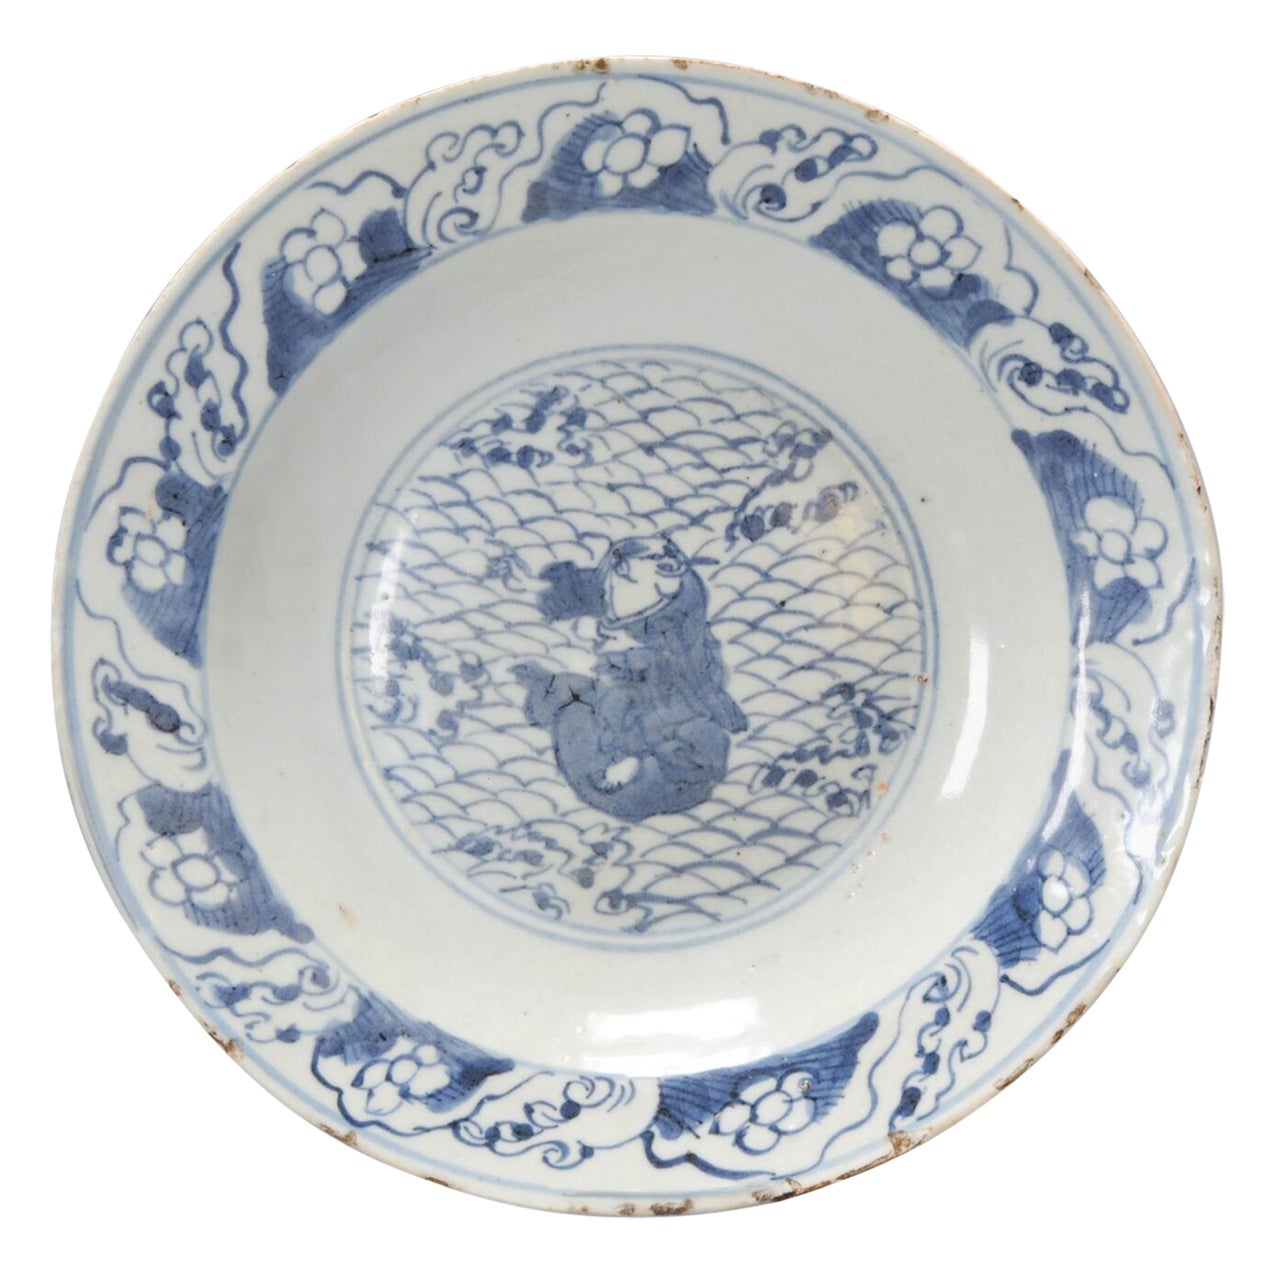 Liu Hai Kosometsuke Antique Chinese Ming Dynasty Plate Porcelain, 16/17th C.